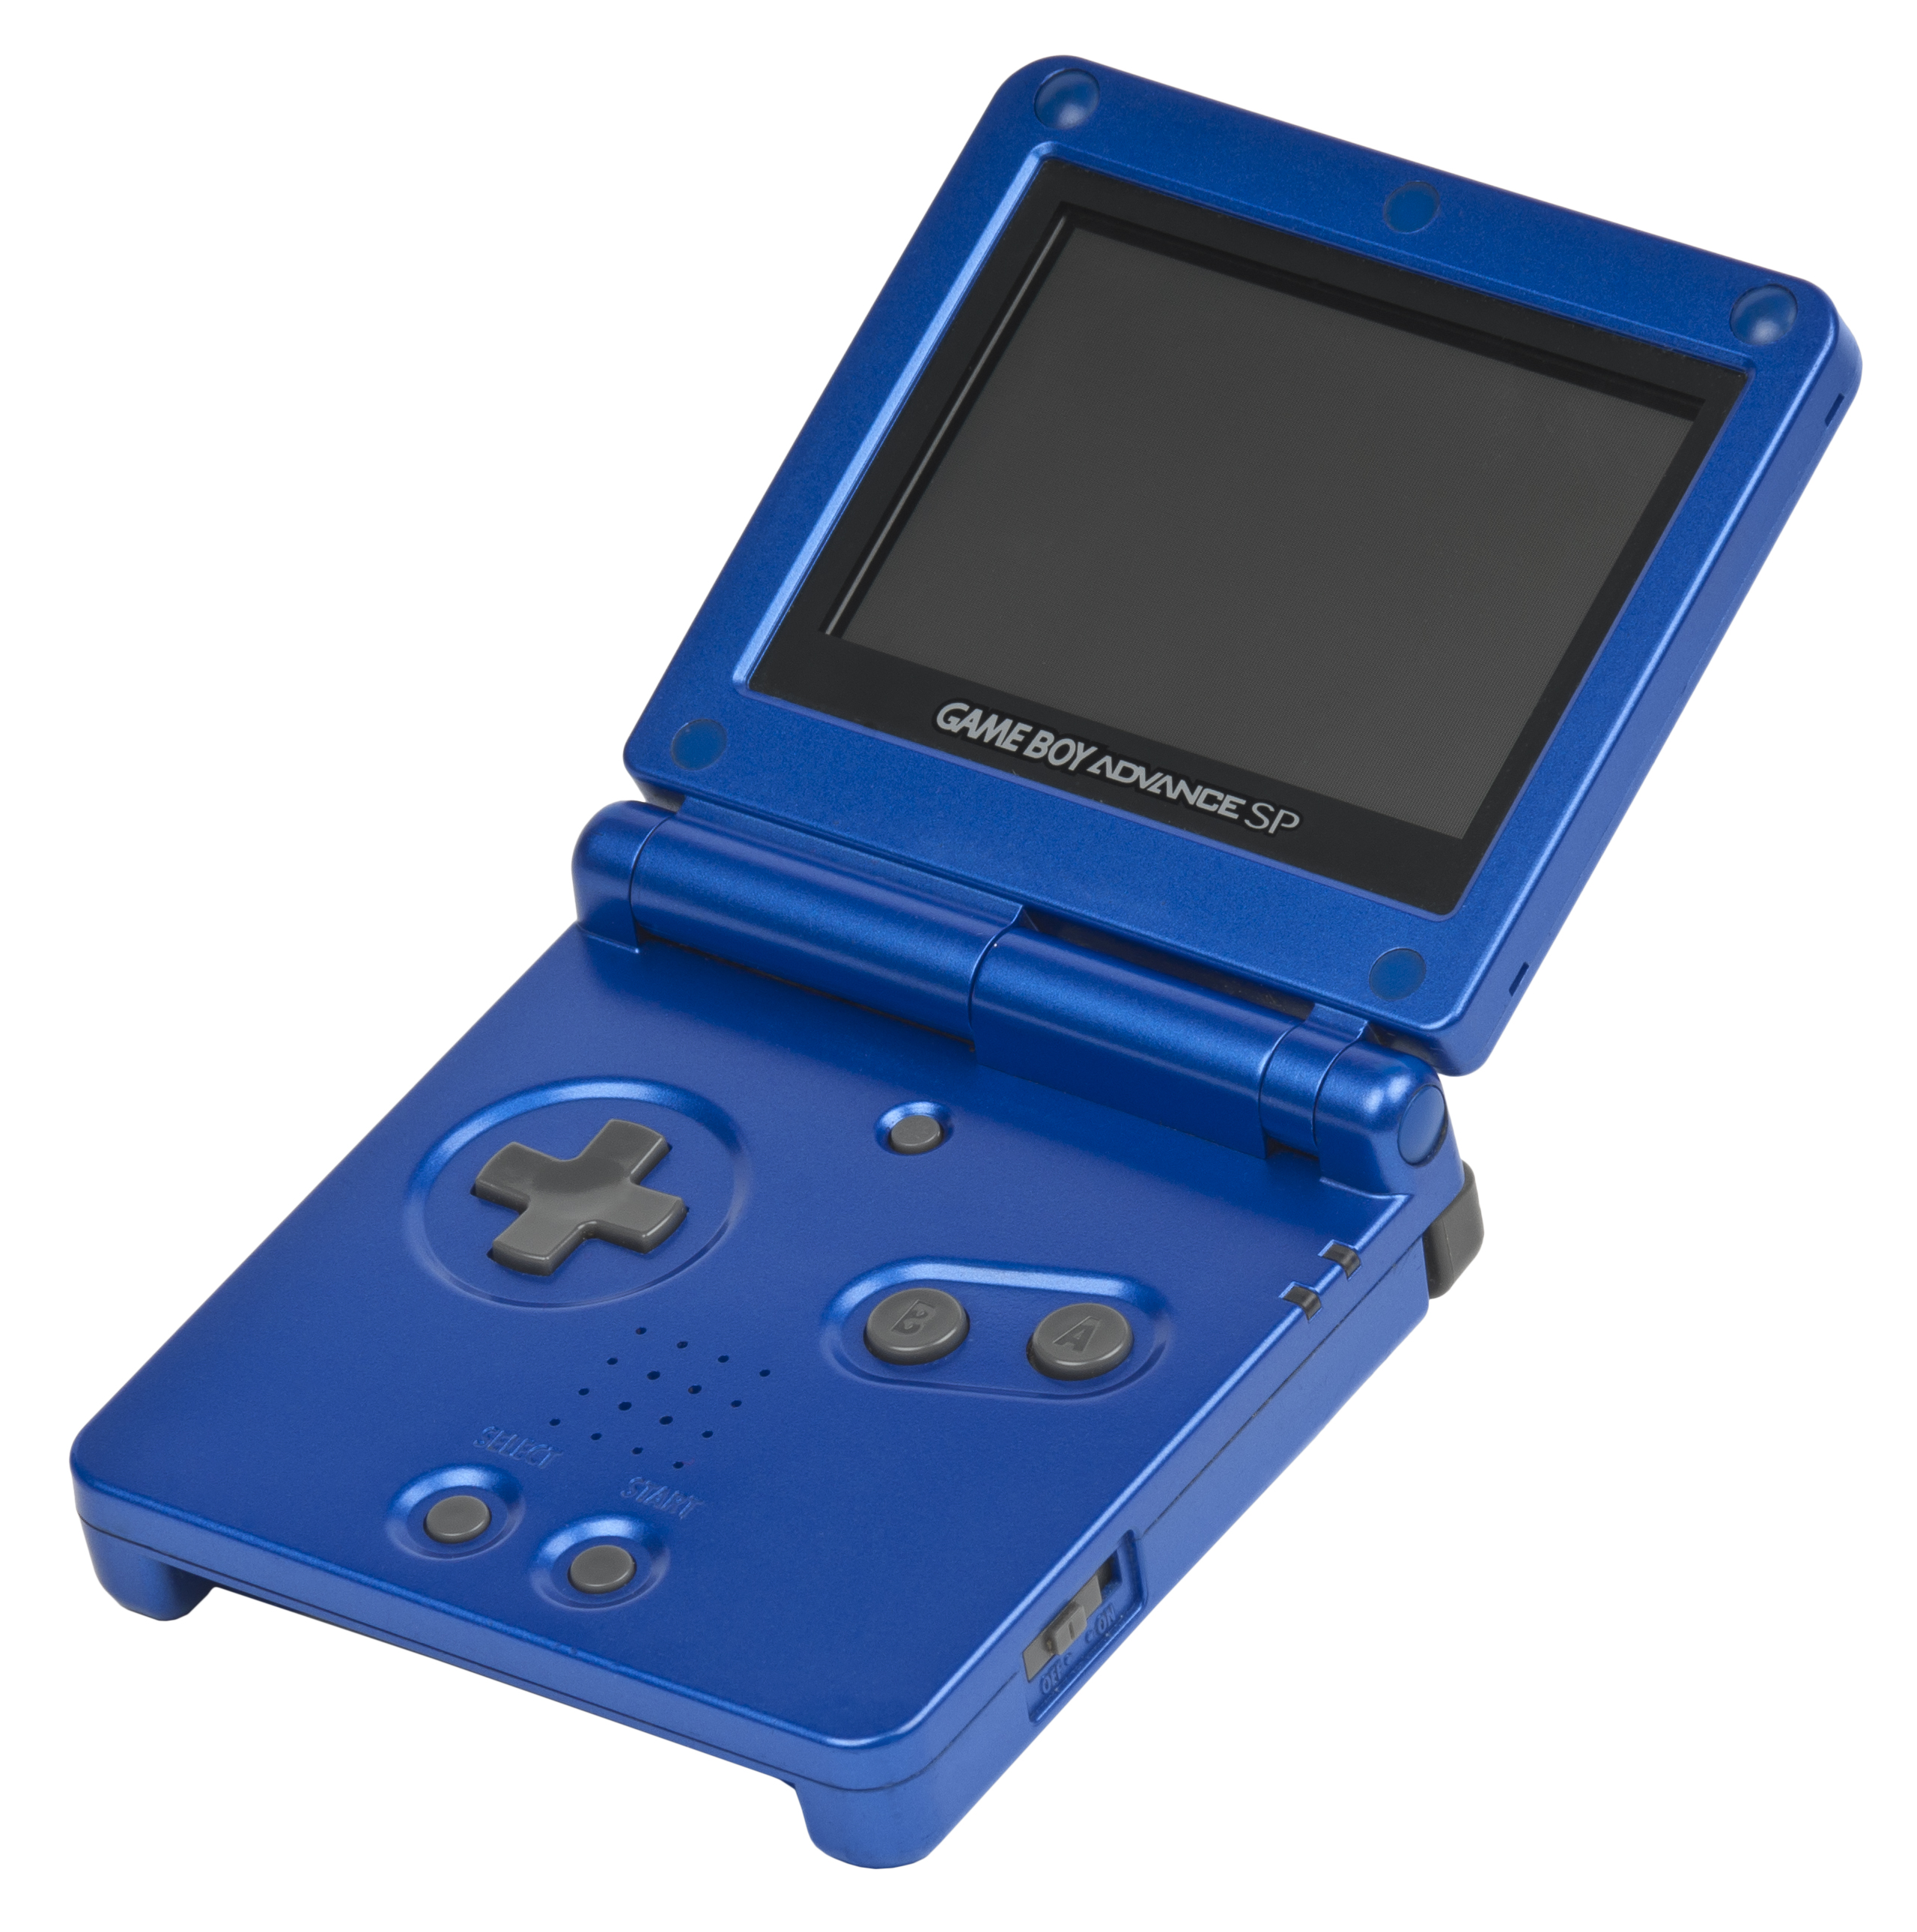 Nintendo Game Boy SP